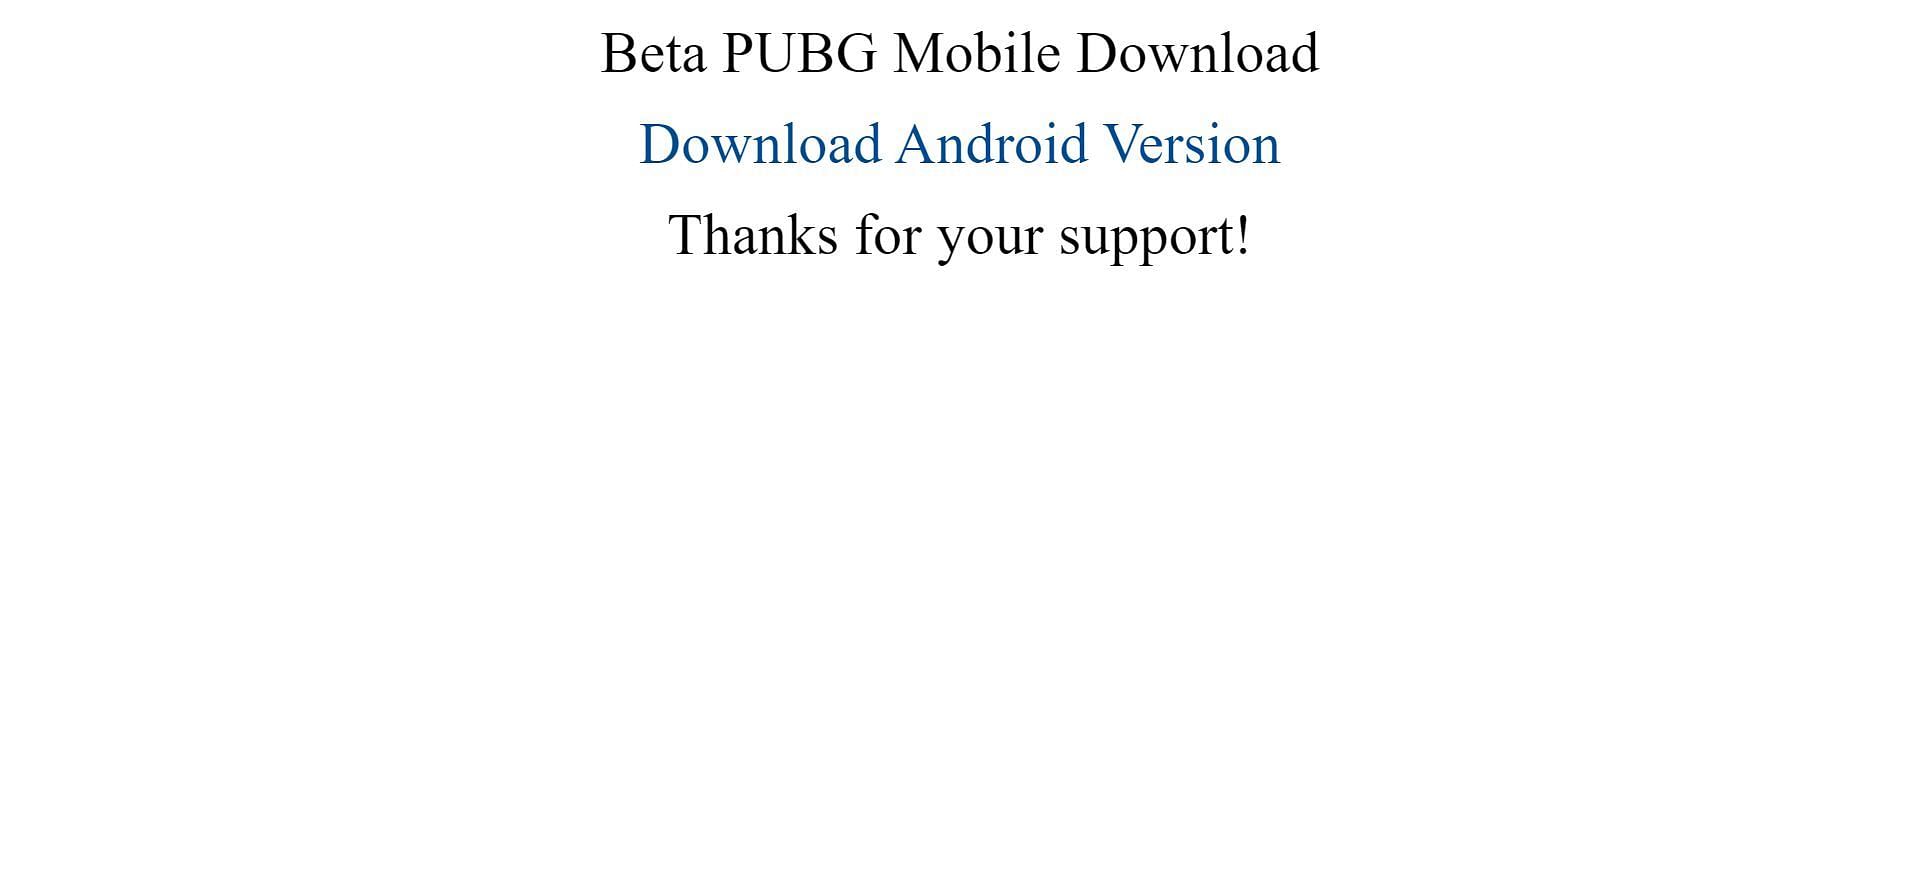 Click Download Android Version button (Image via PUBG Mobile)